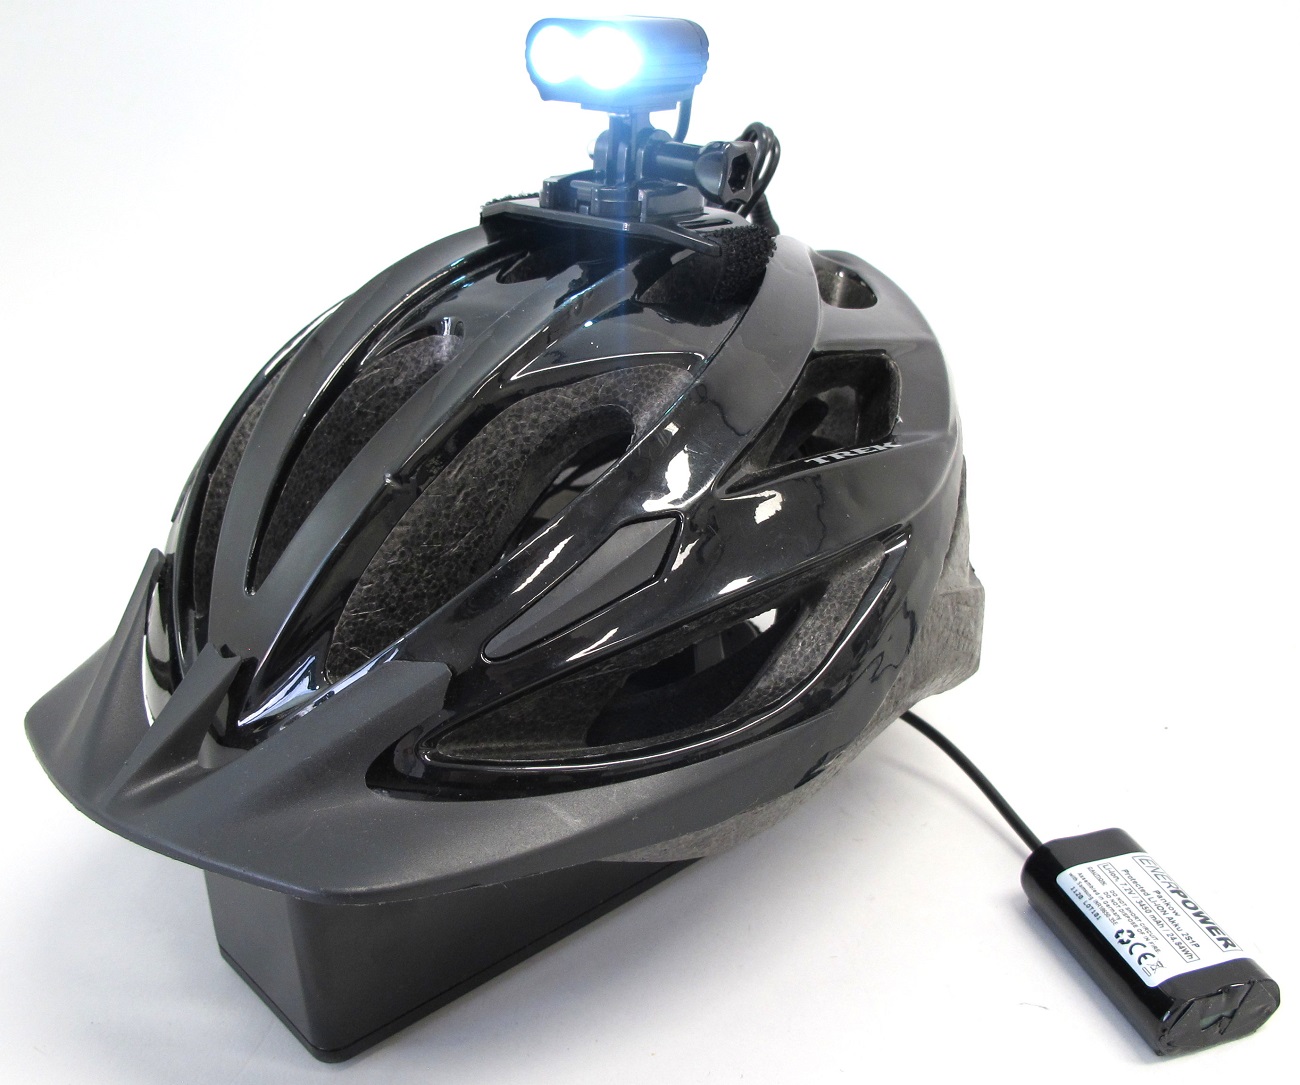 Enerpower FALCON CREE XPG2 R5 helmet lamp 800 lumens GoPro Version